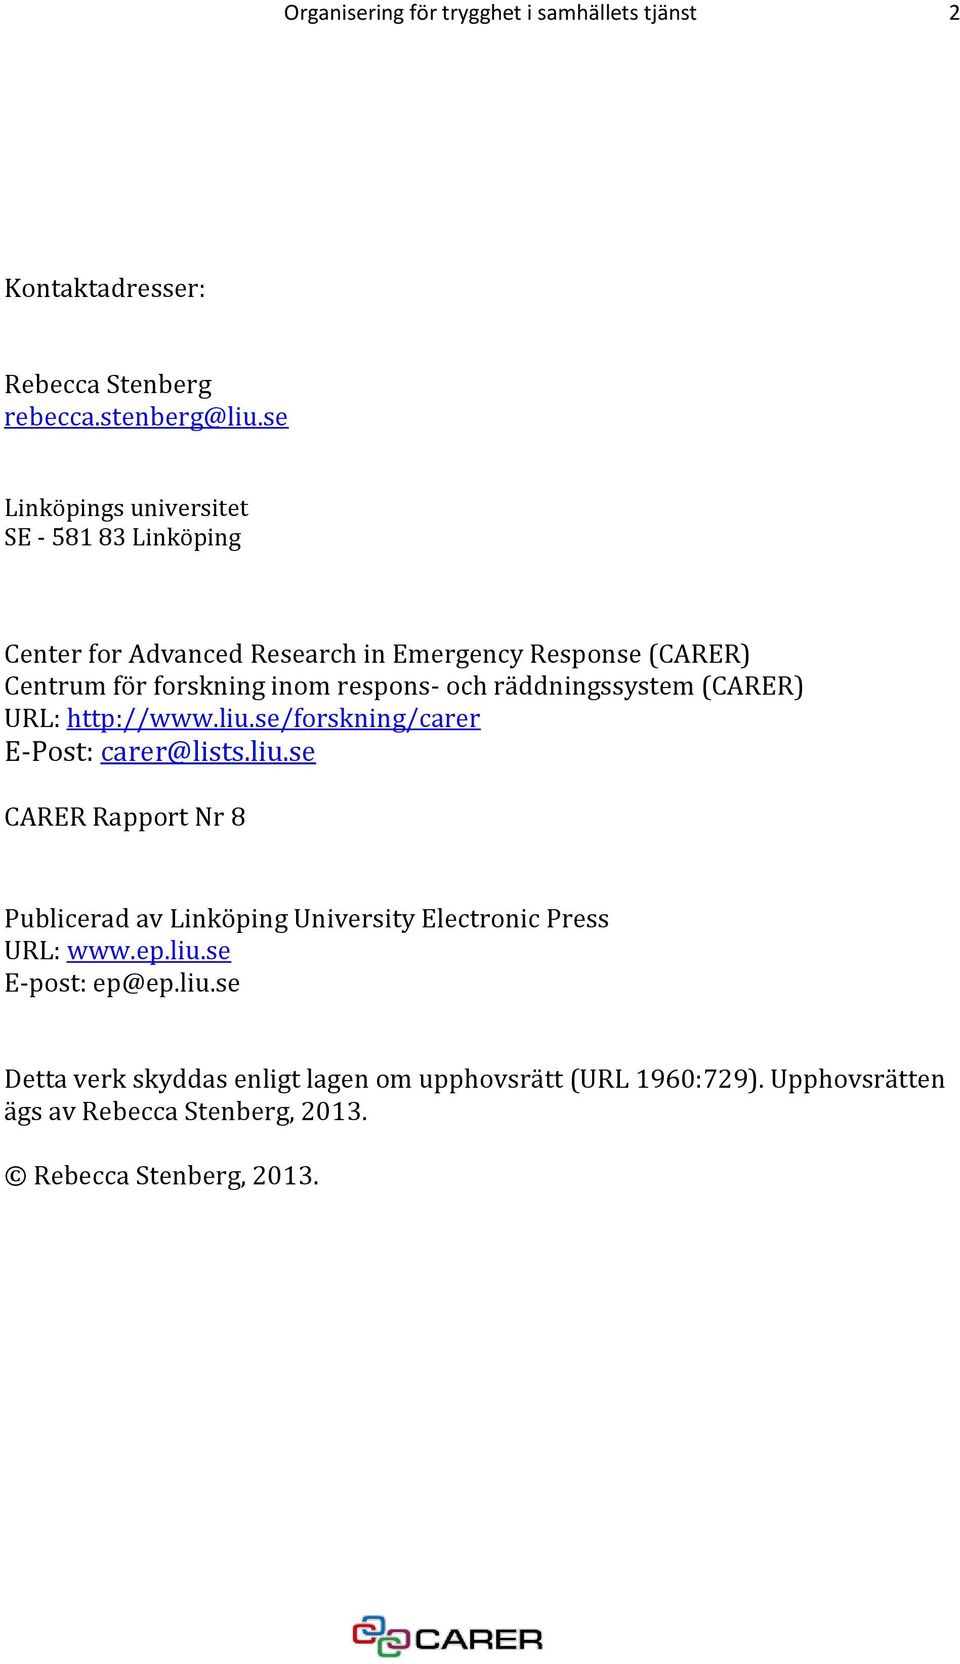 och räddningssystem (CARER) URL: http://www.liu.se/forskning/carer E-Post: carer@lists.liu.se CARER Rapport Nr 8 Publicerad av Linköping University Electronic Press URL: www.